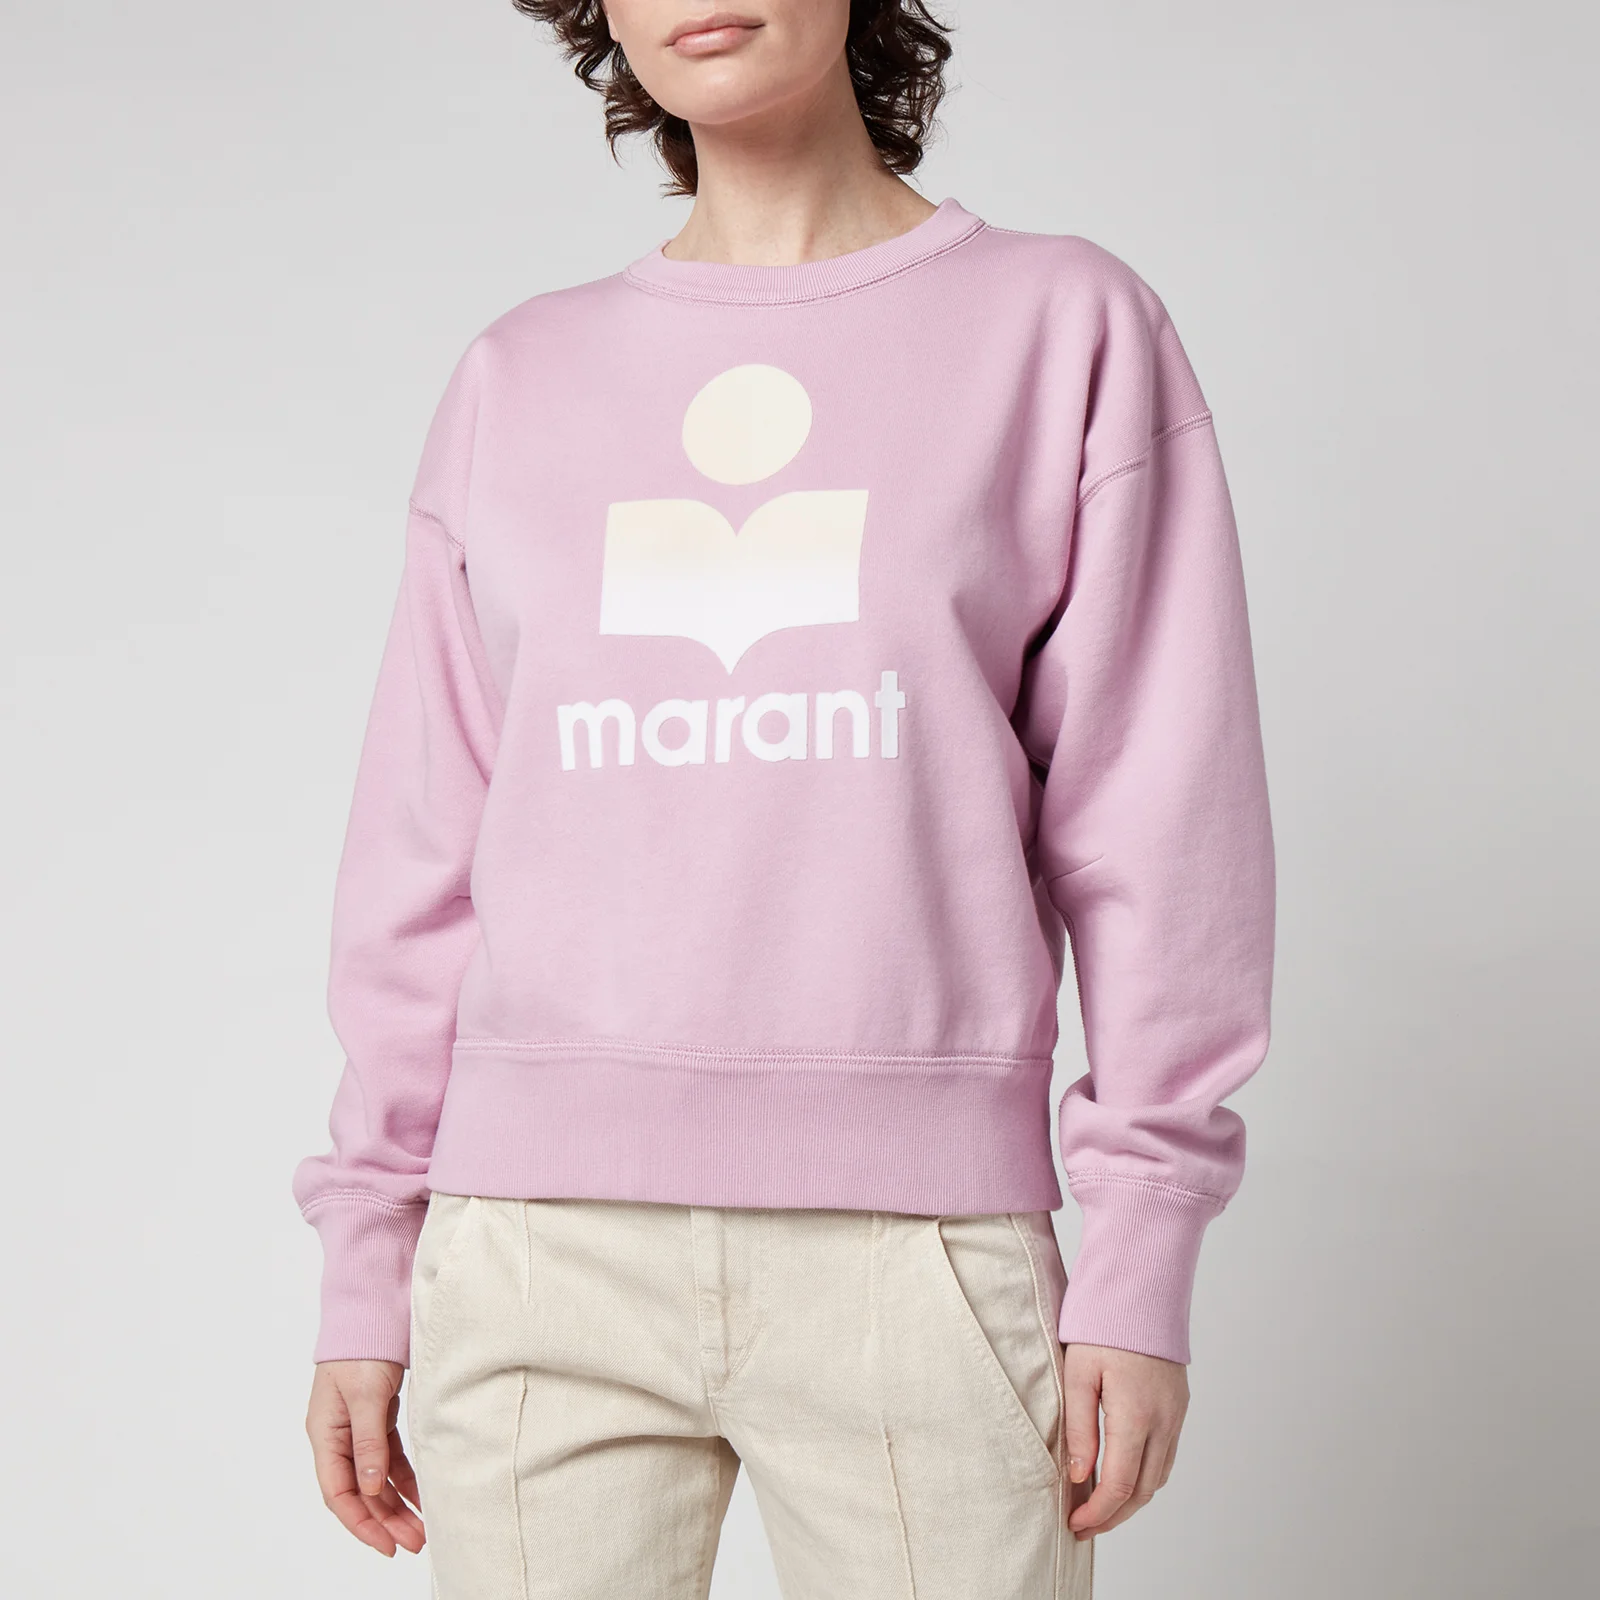 Marant Étoile Women's Mobyli Sweatshirt - Light Pink Image 1